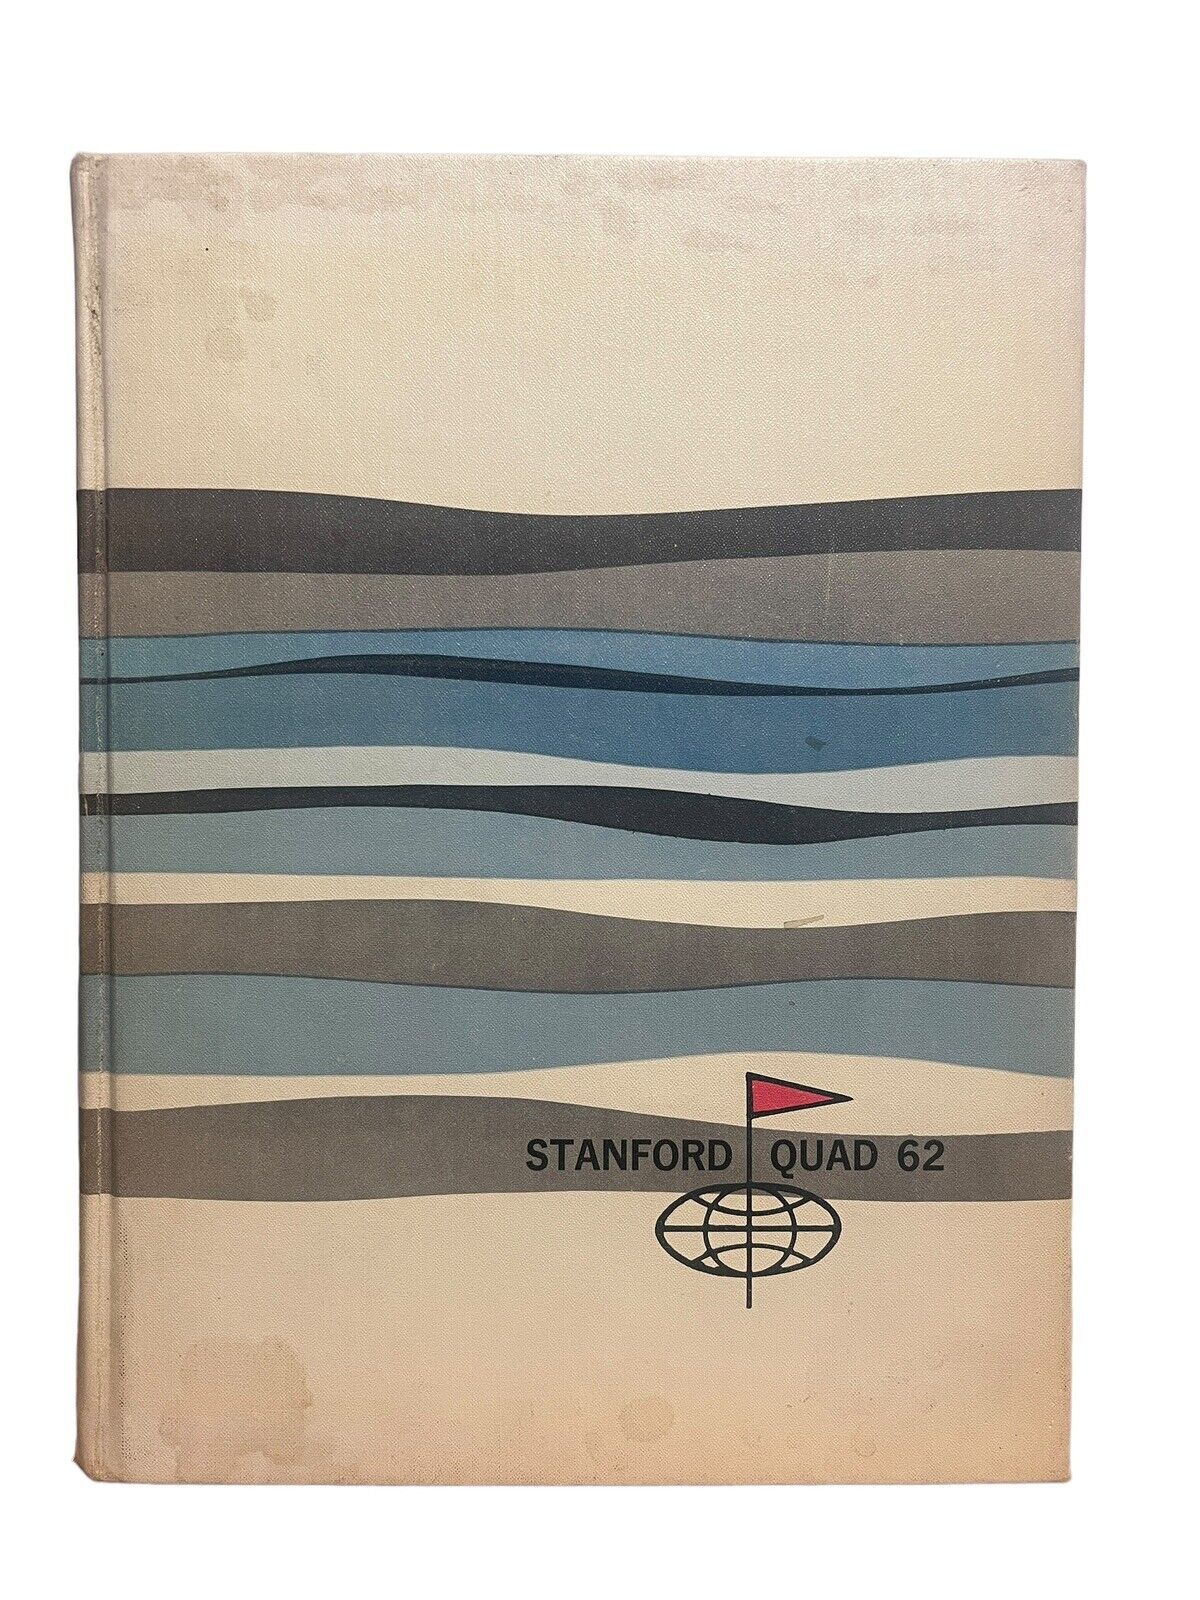 Vintage 1962 Stanford University Quad Yearbook. Volume 69